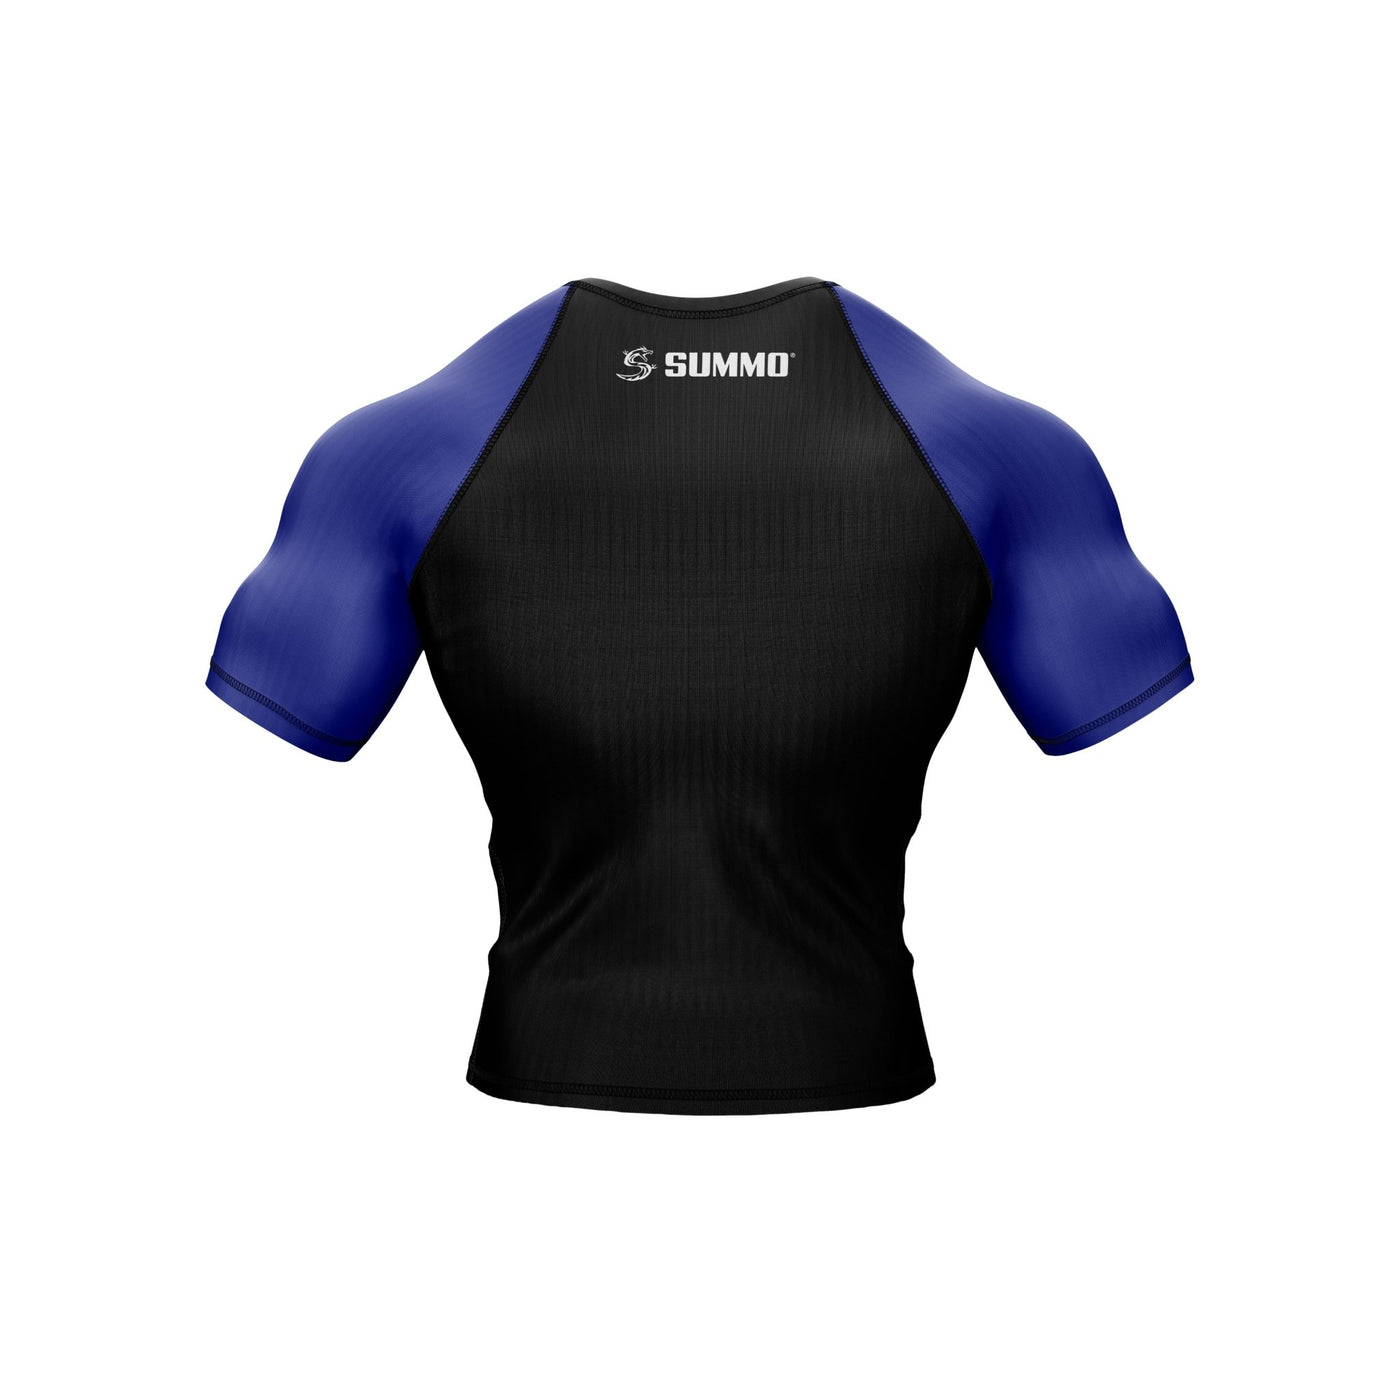 Black with Blue Sleeves Ranked Rashguard - Summo Sports